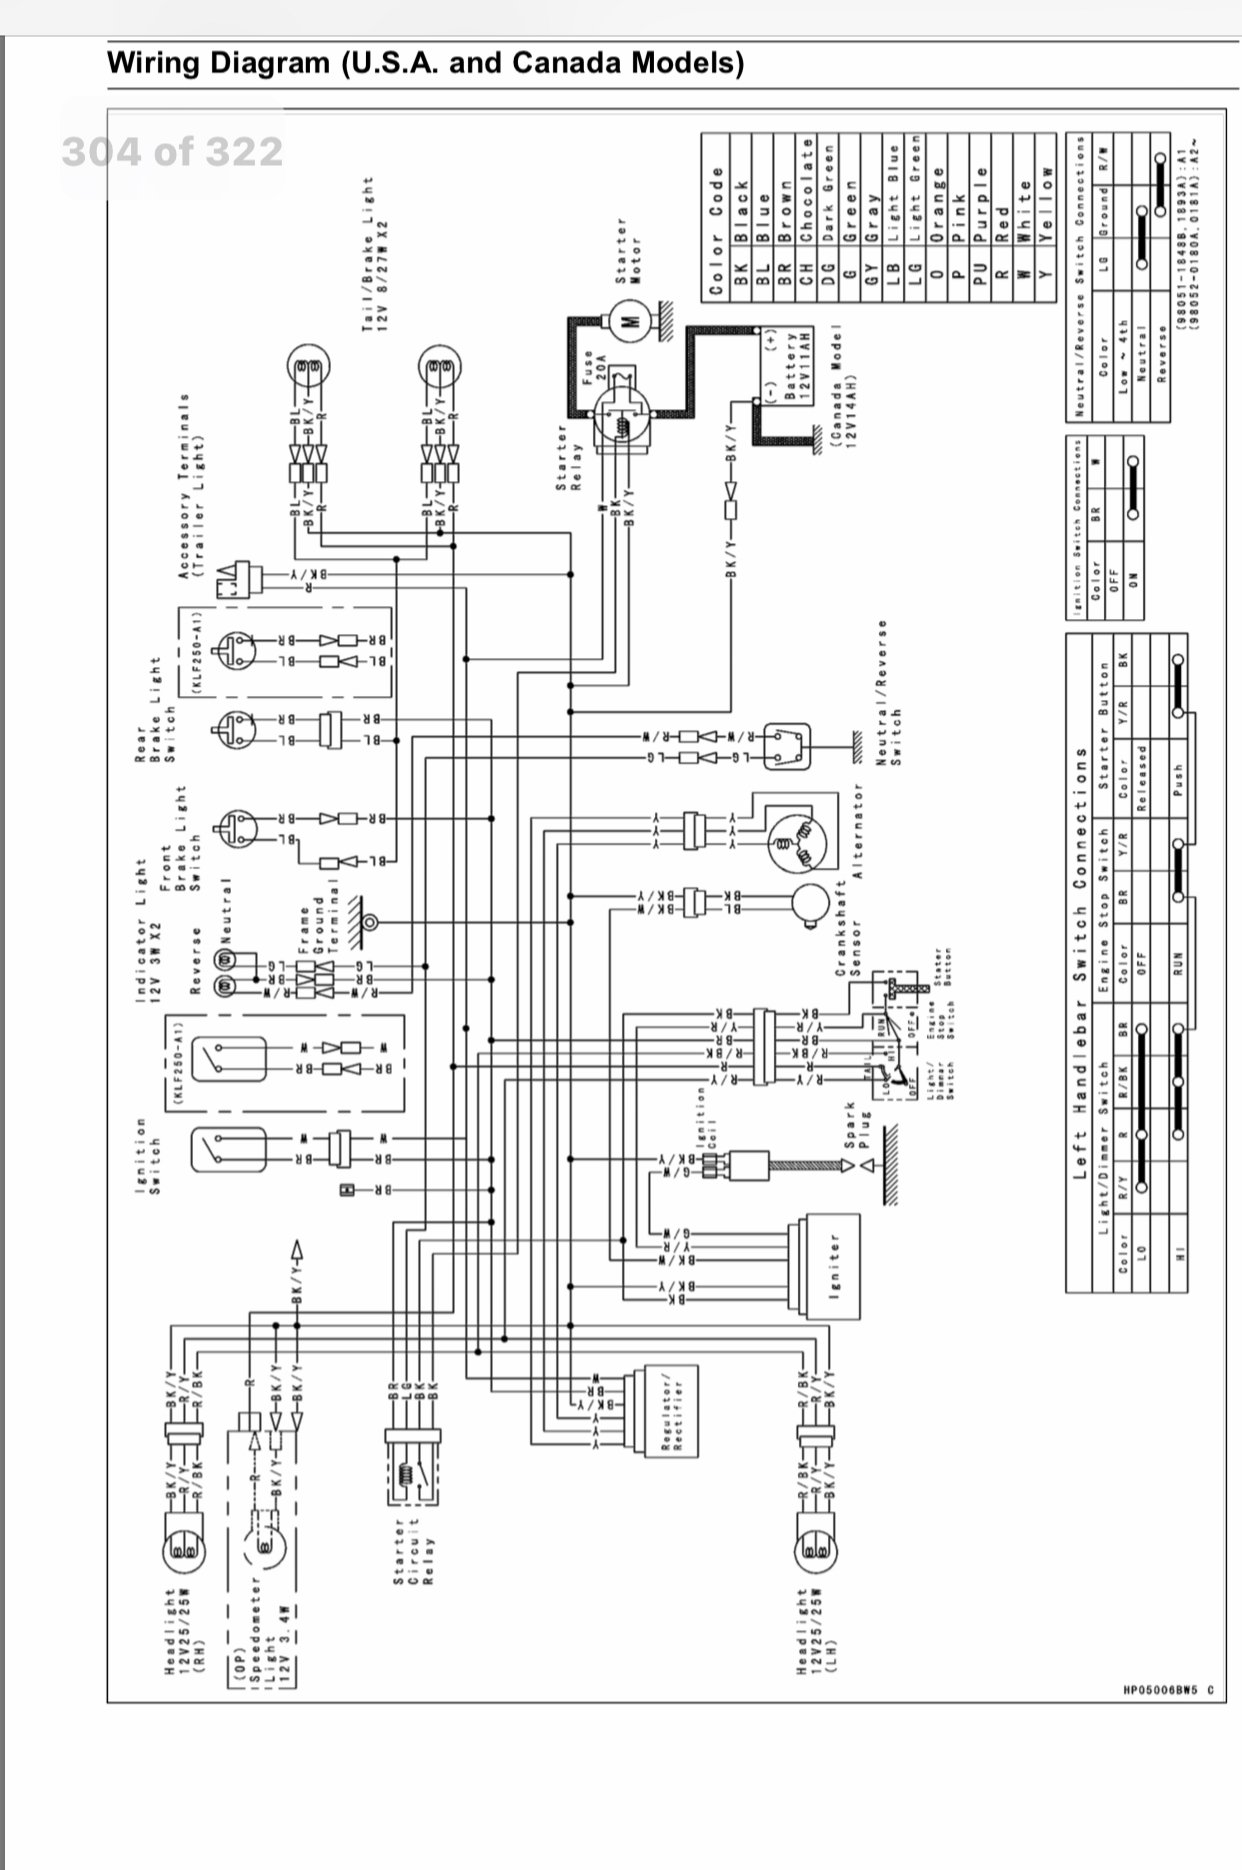 1991 Kawasaki Bayou 220 Wiring Diagram Wiring Diagram Load View Load View Giorgiomariacalori It